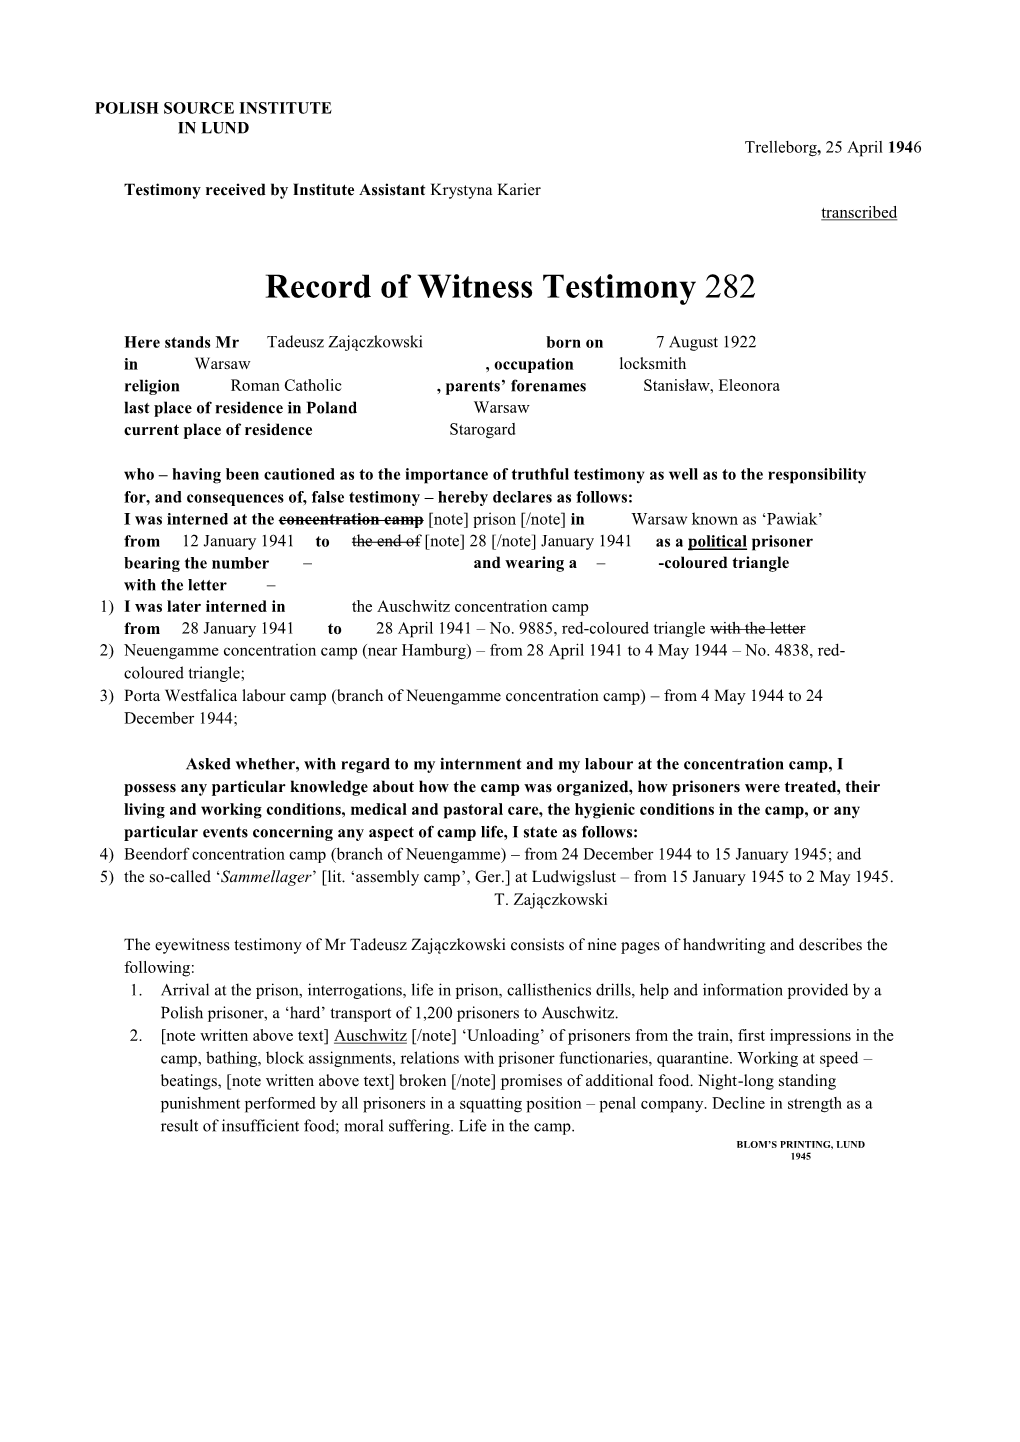 Record of Witness Testimony 282